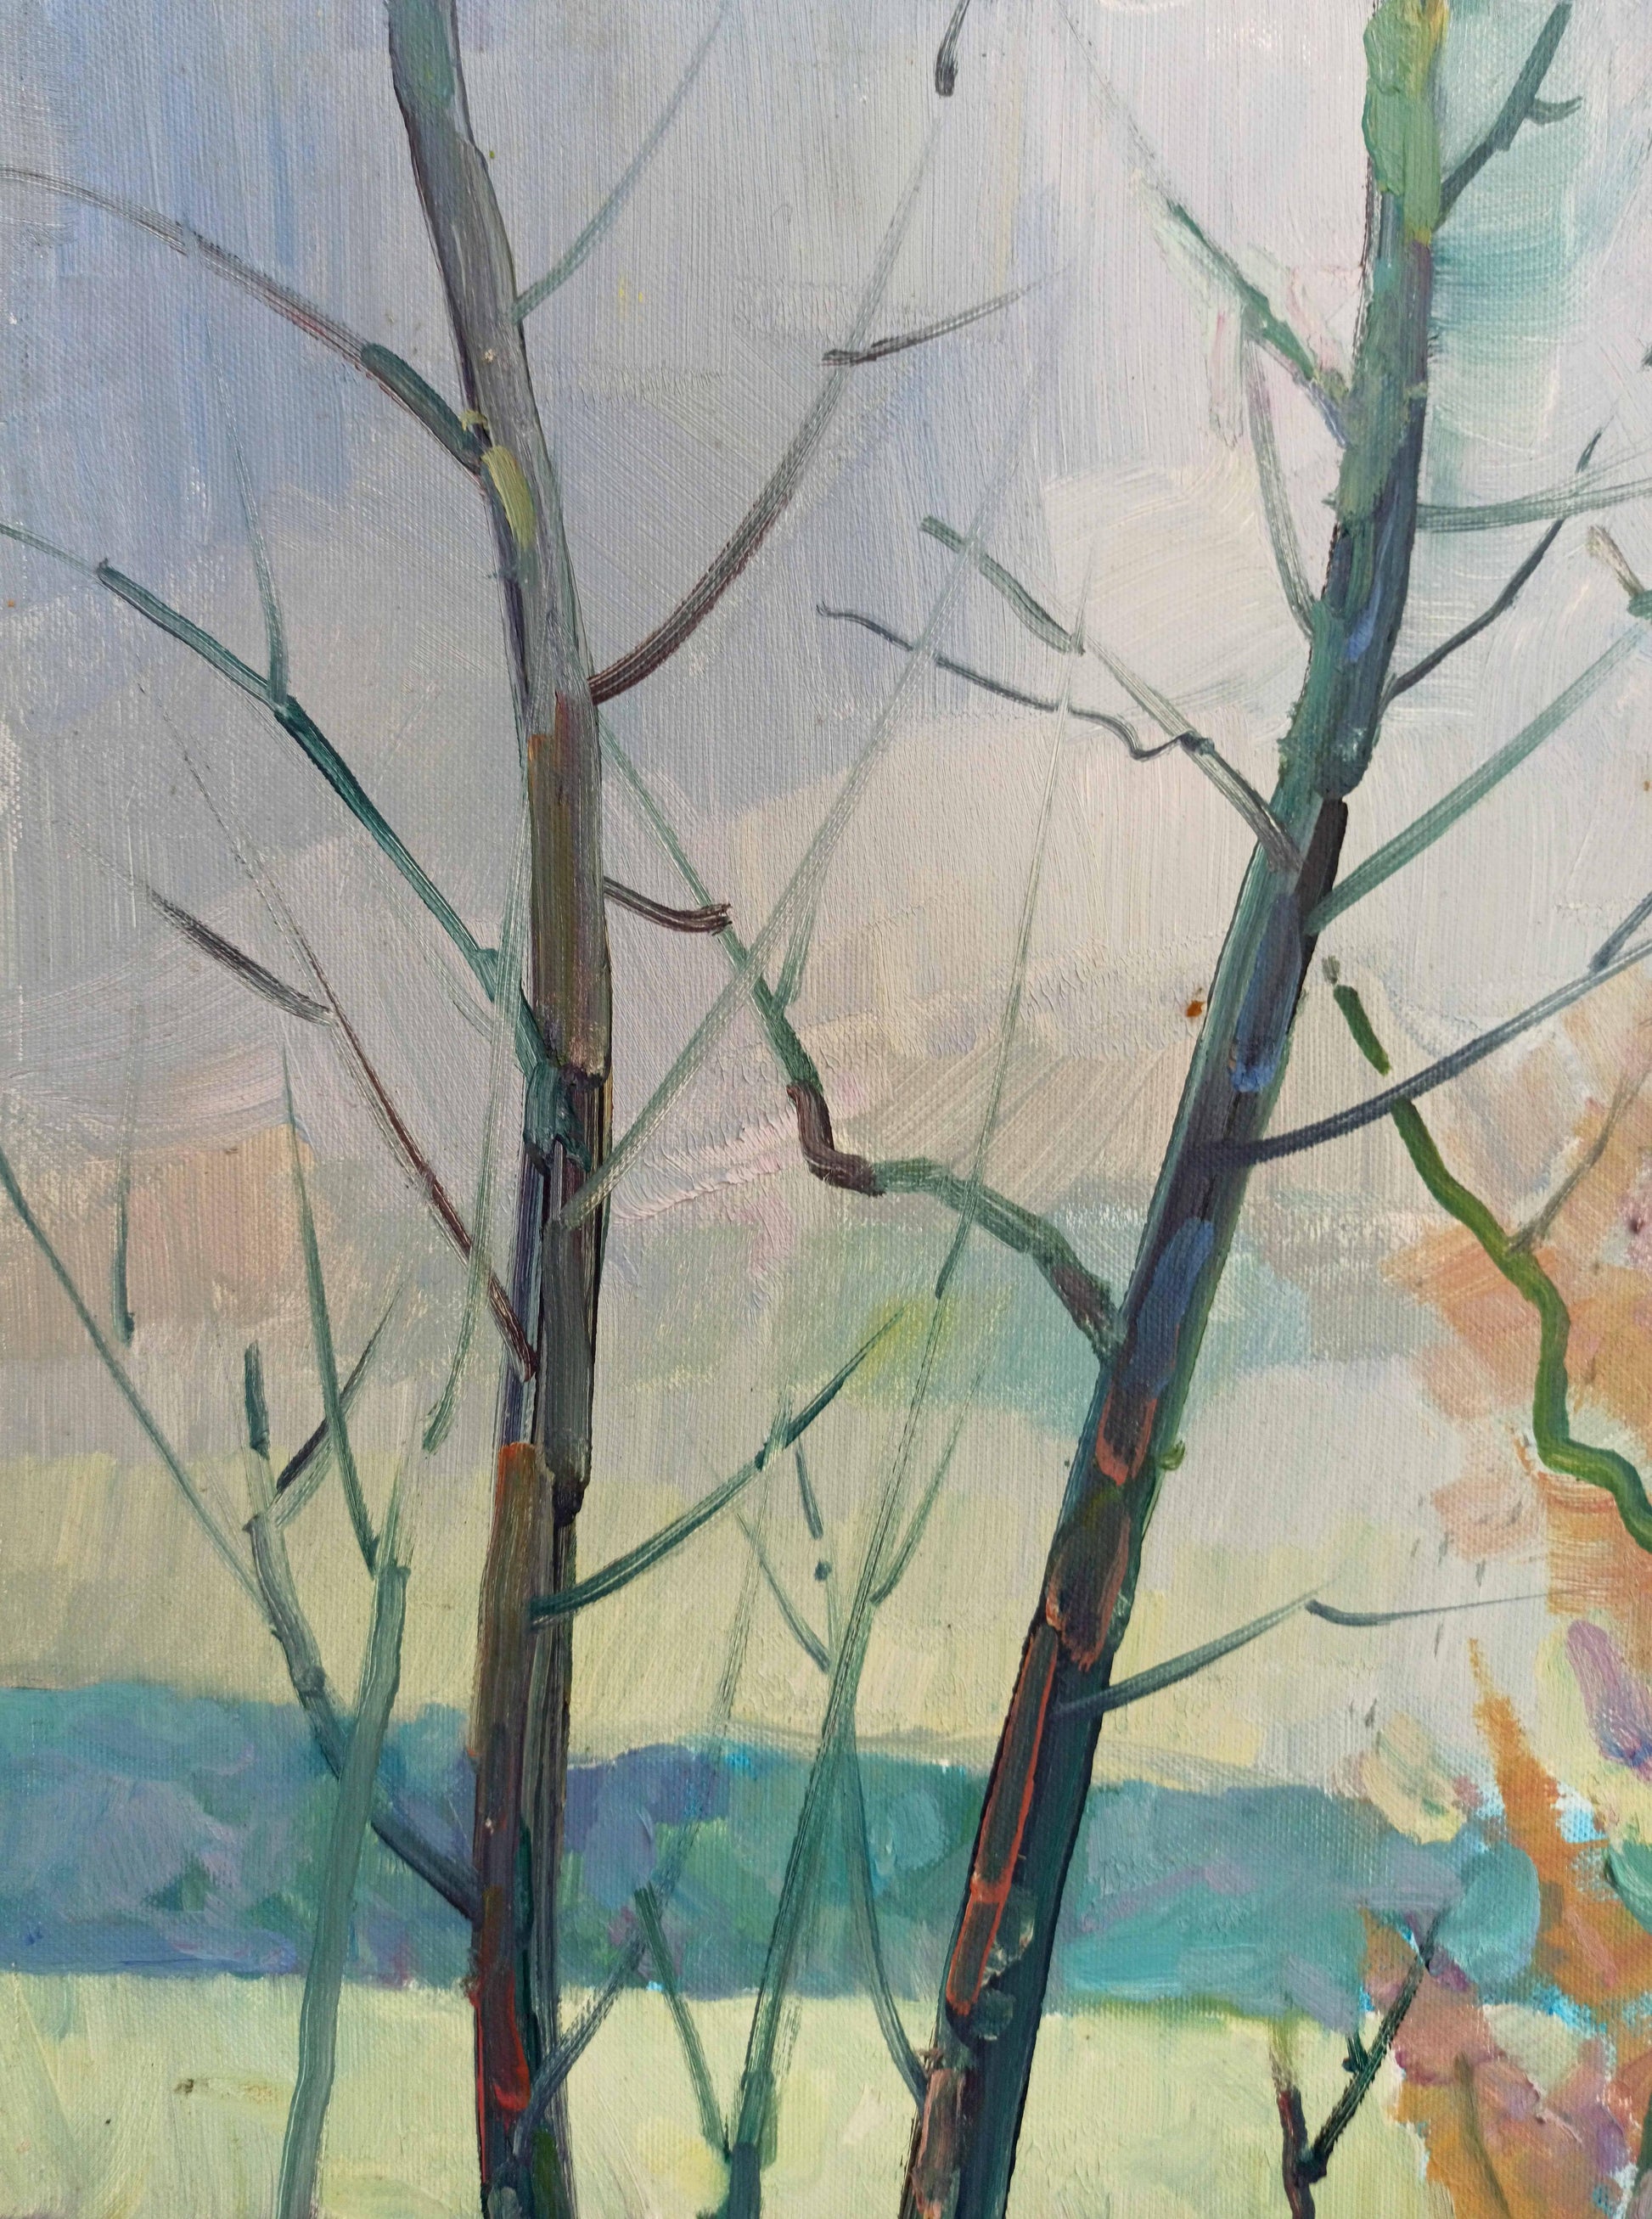 Peter Dobrev's oil painting depicts a spring landscape